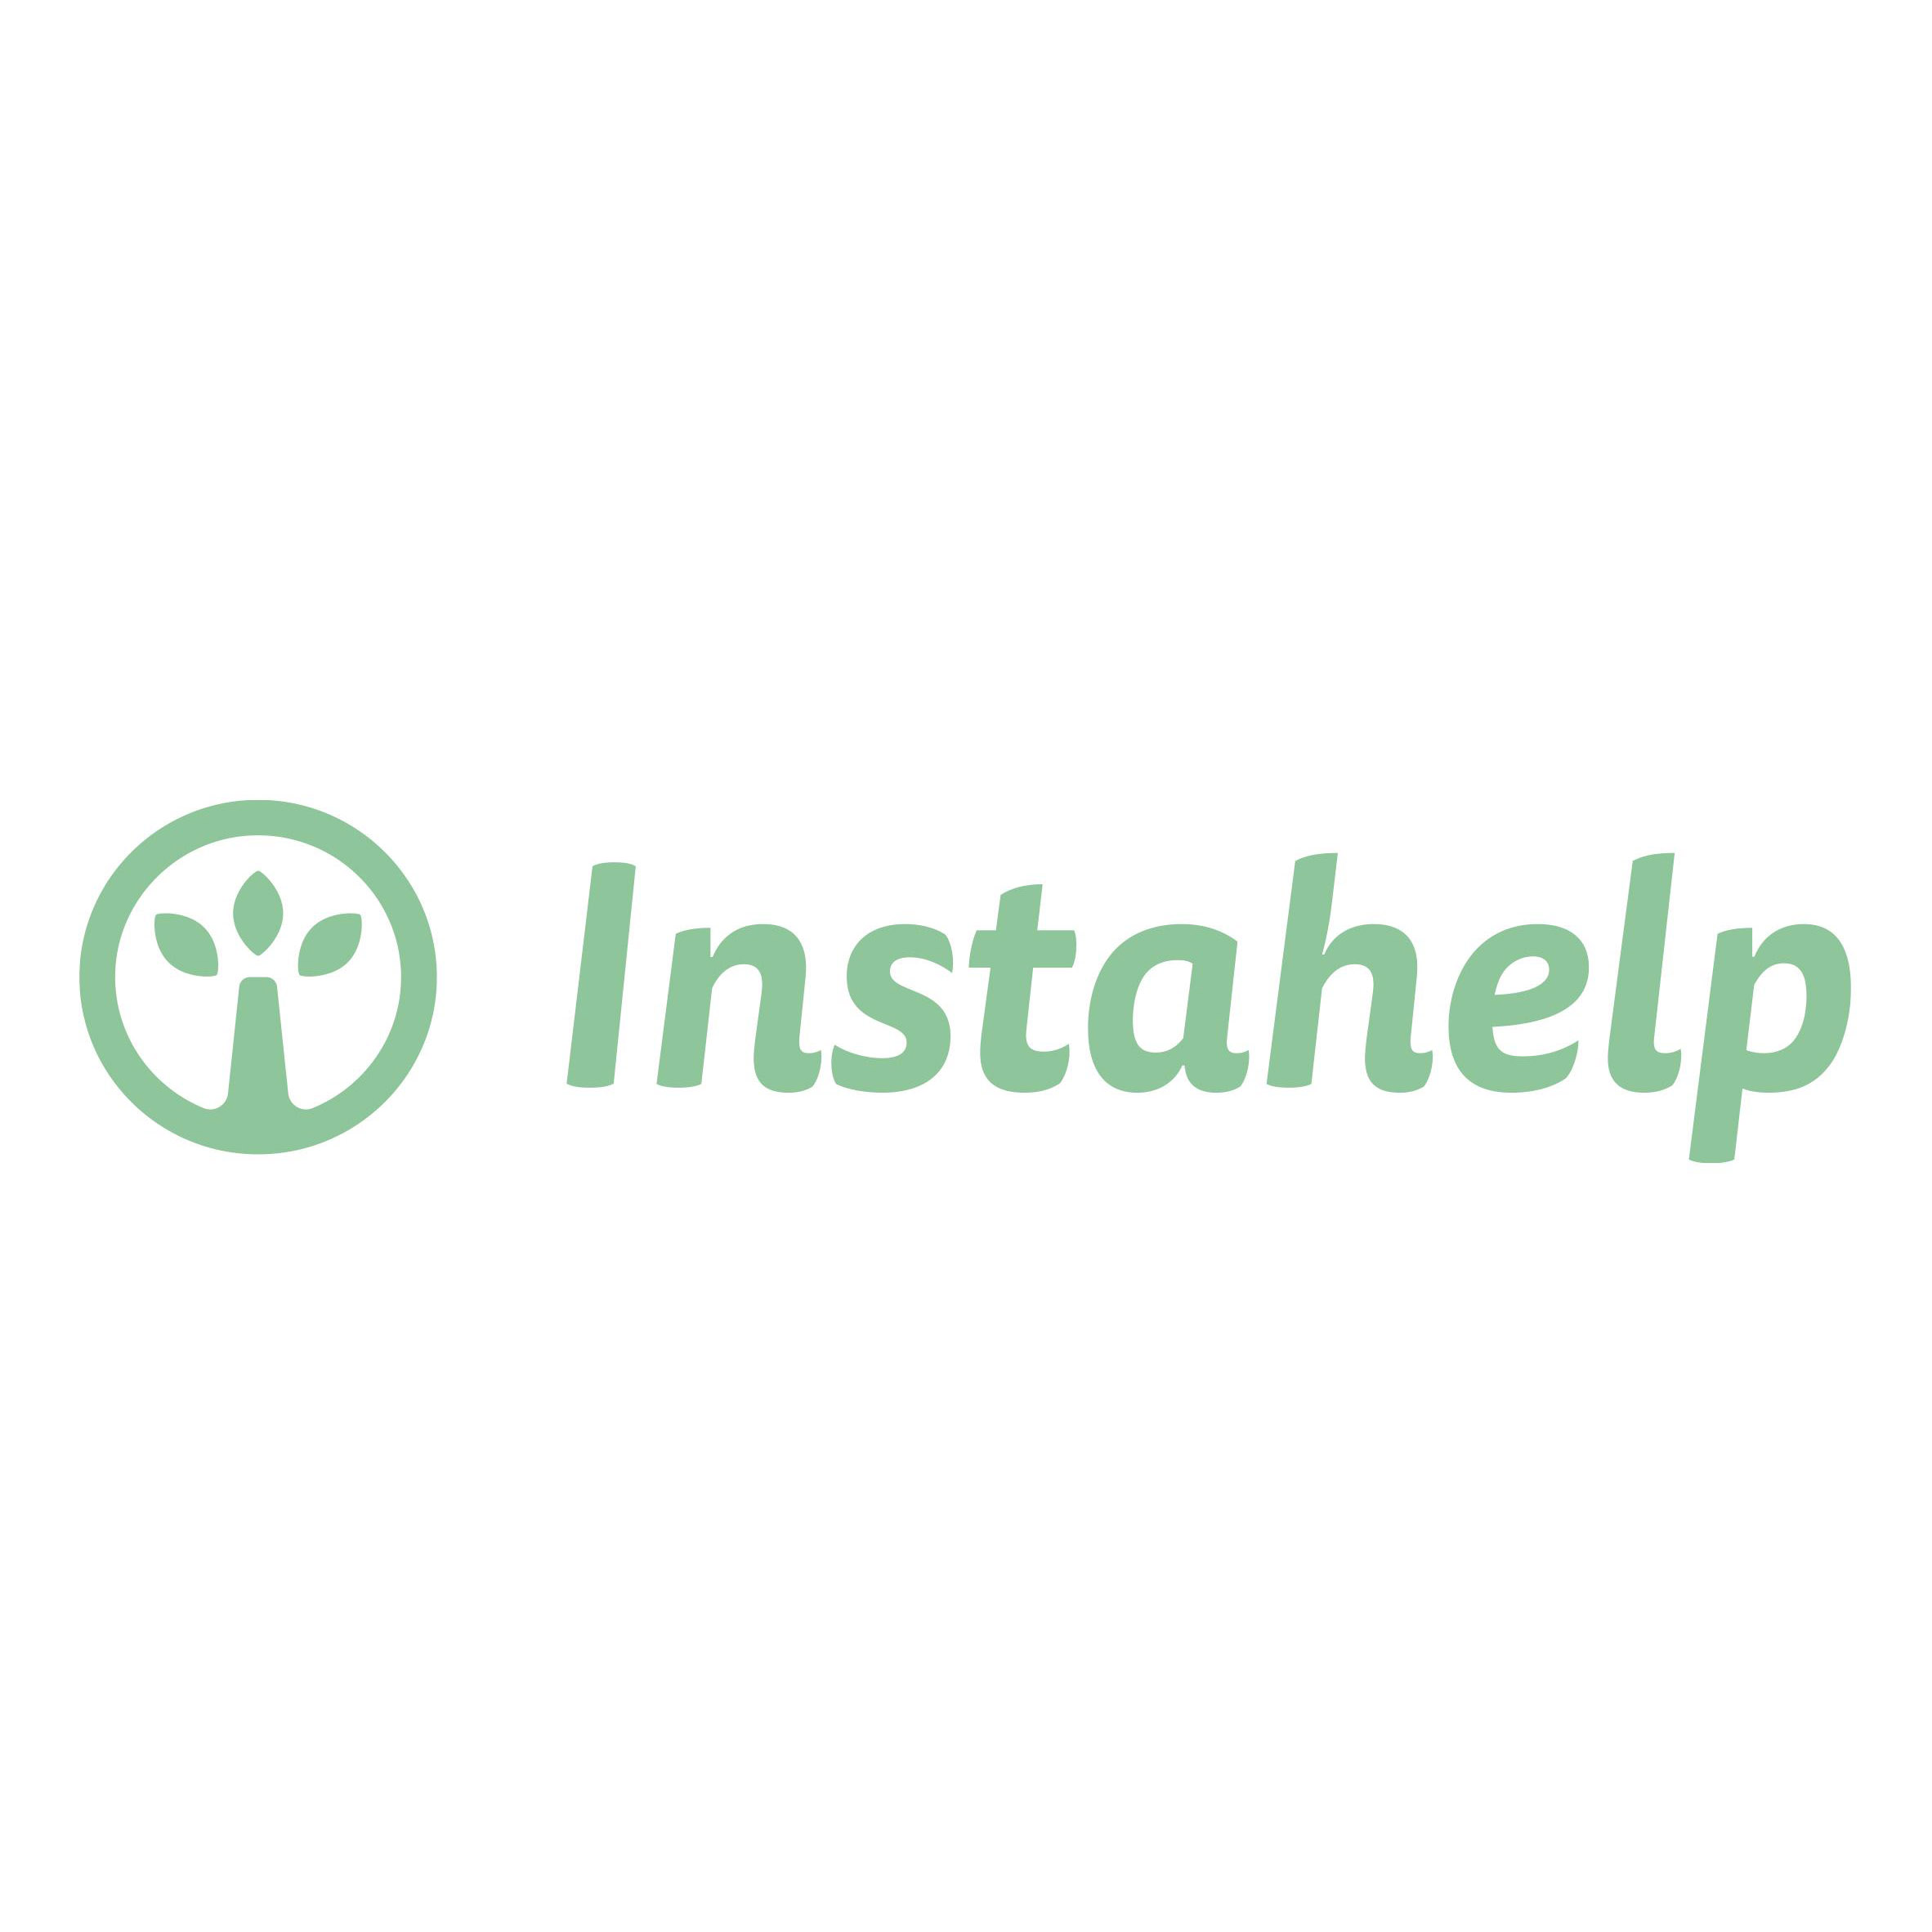 Instahelp − building partnerships for mental health